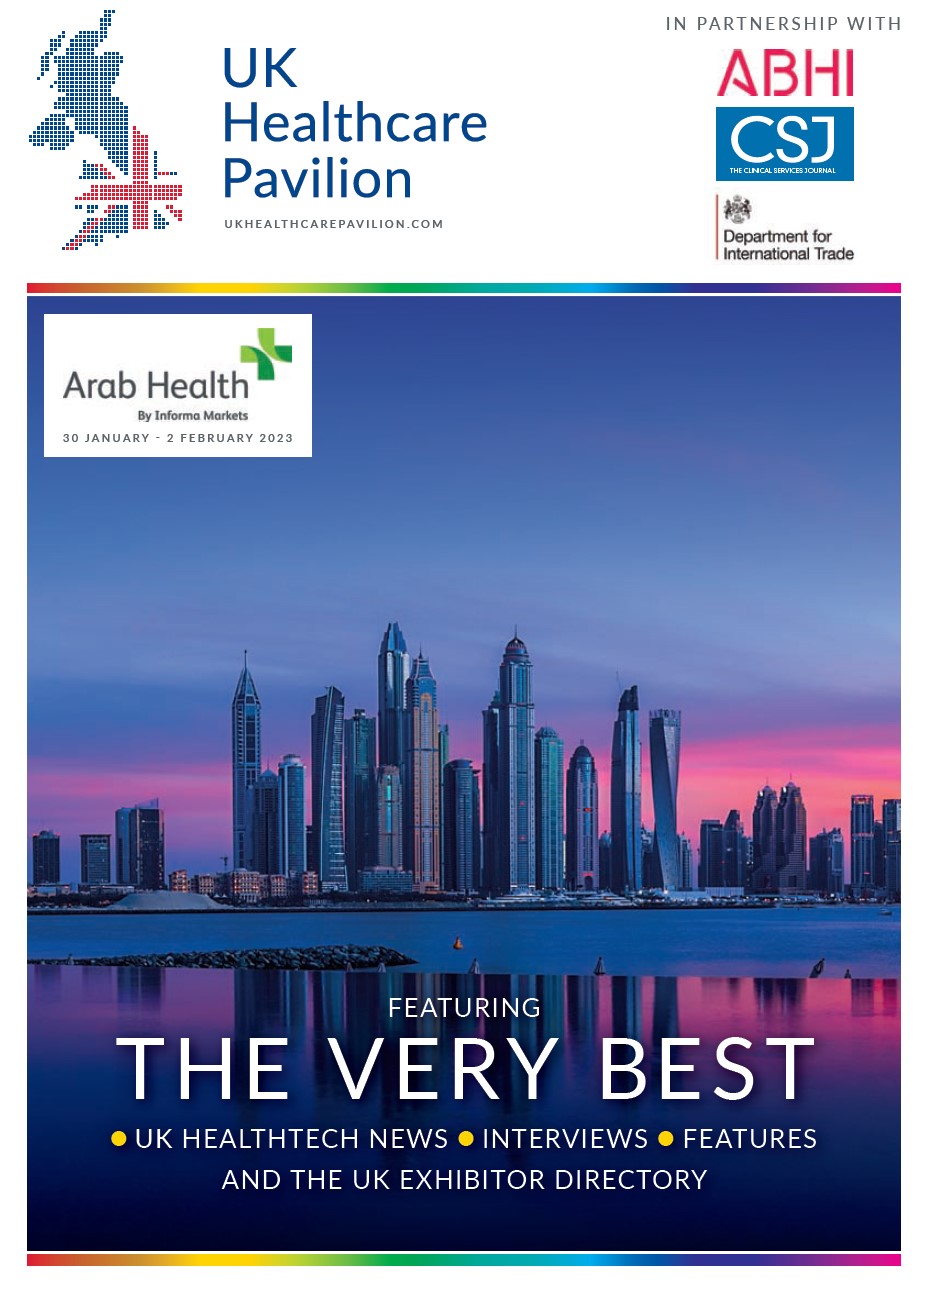 Arab_Health_UK_Healthcare_Pavilion_Magazine.jpg